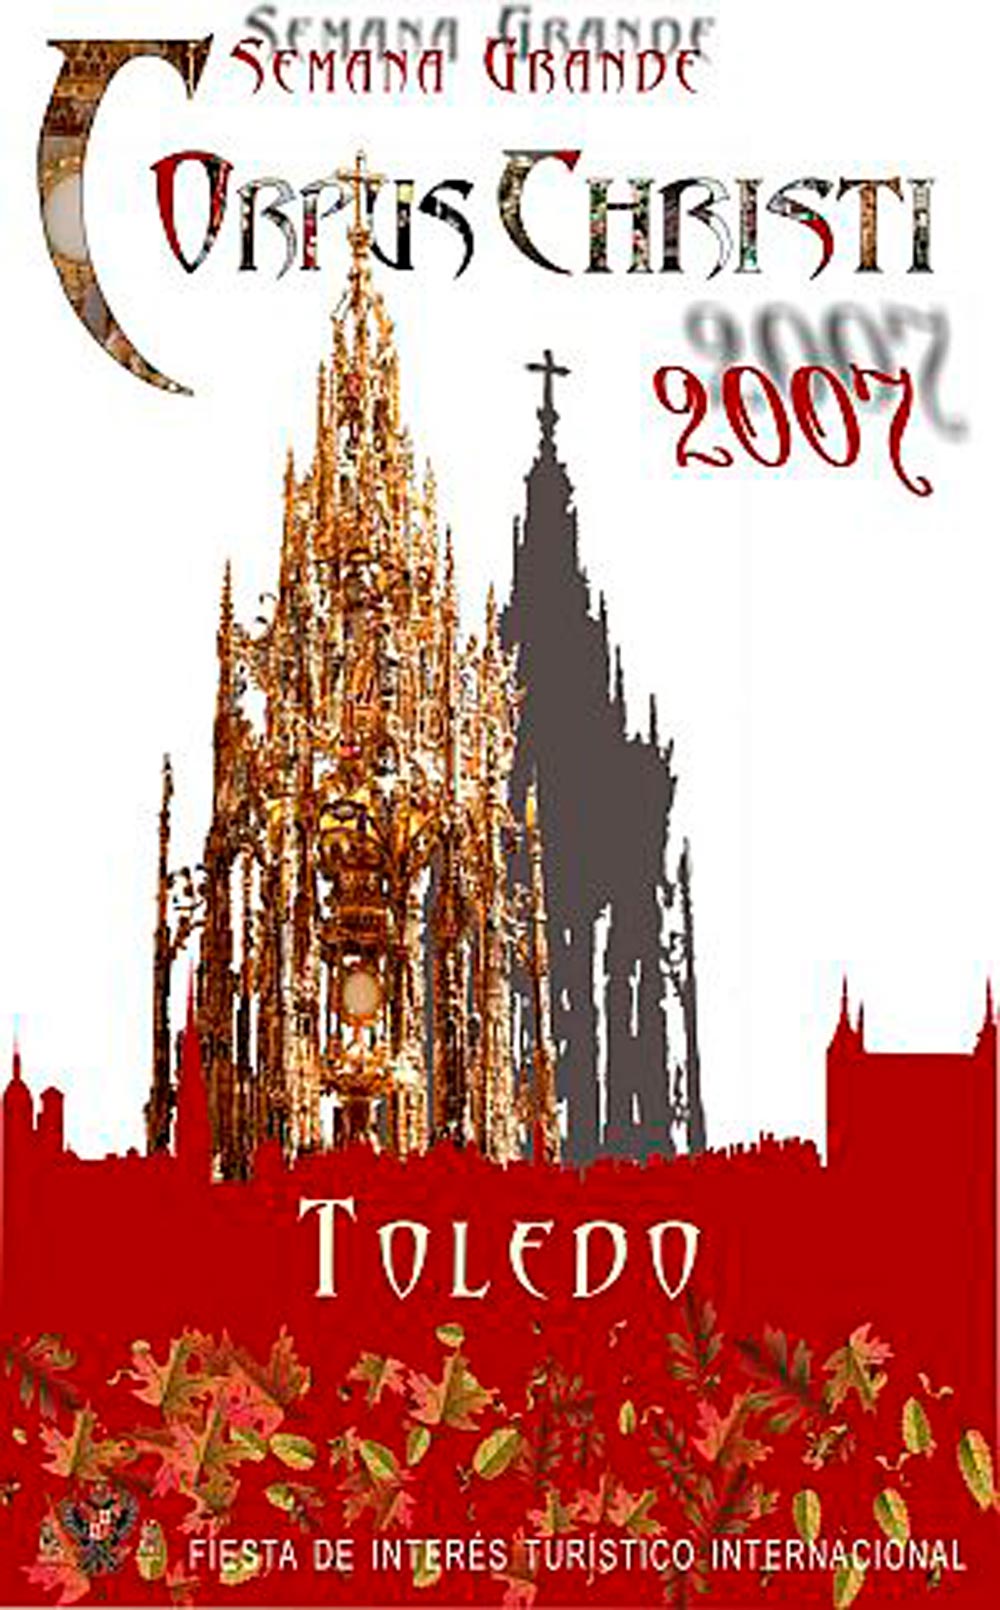 Corpus Christi en Toledo